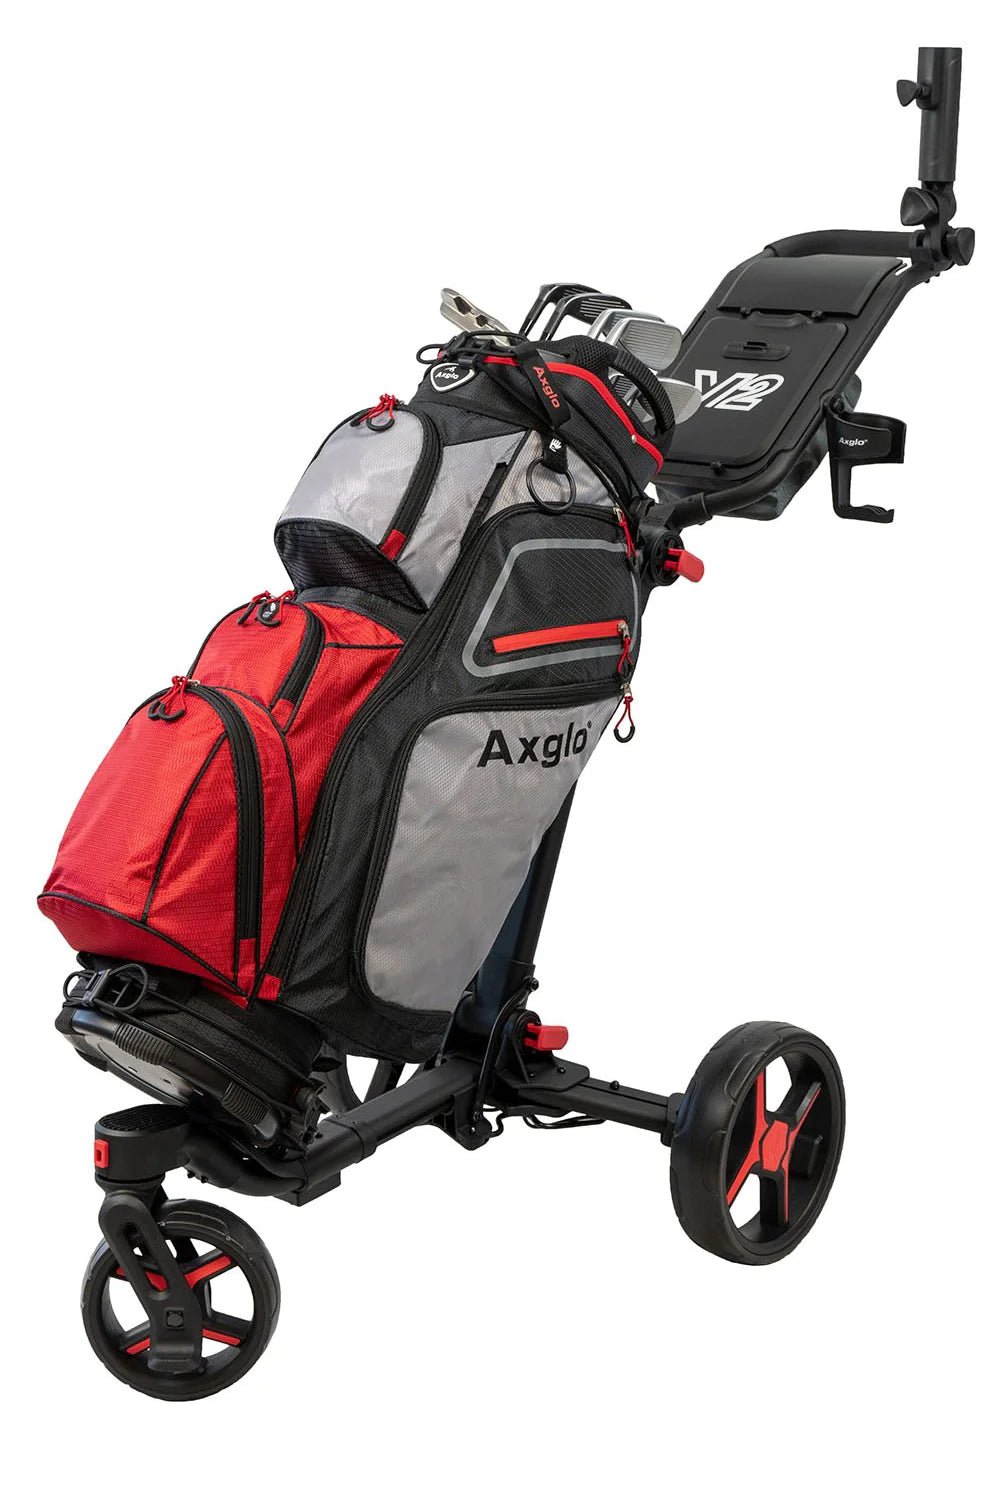 Axglo V2 + Alphard Club Booster V2 Bundle - Big Horn Golfer